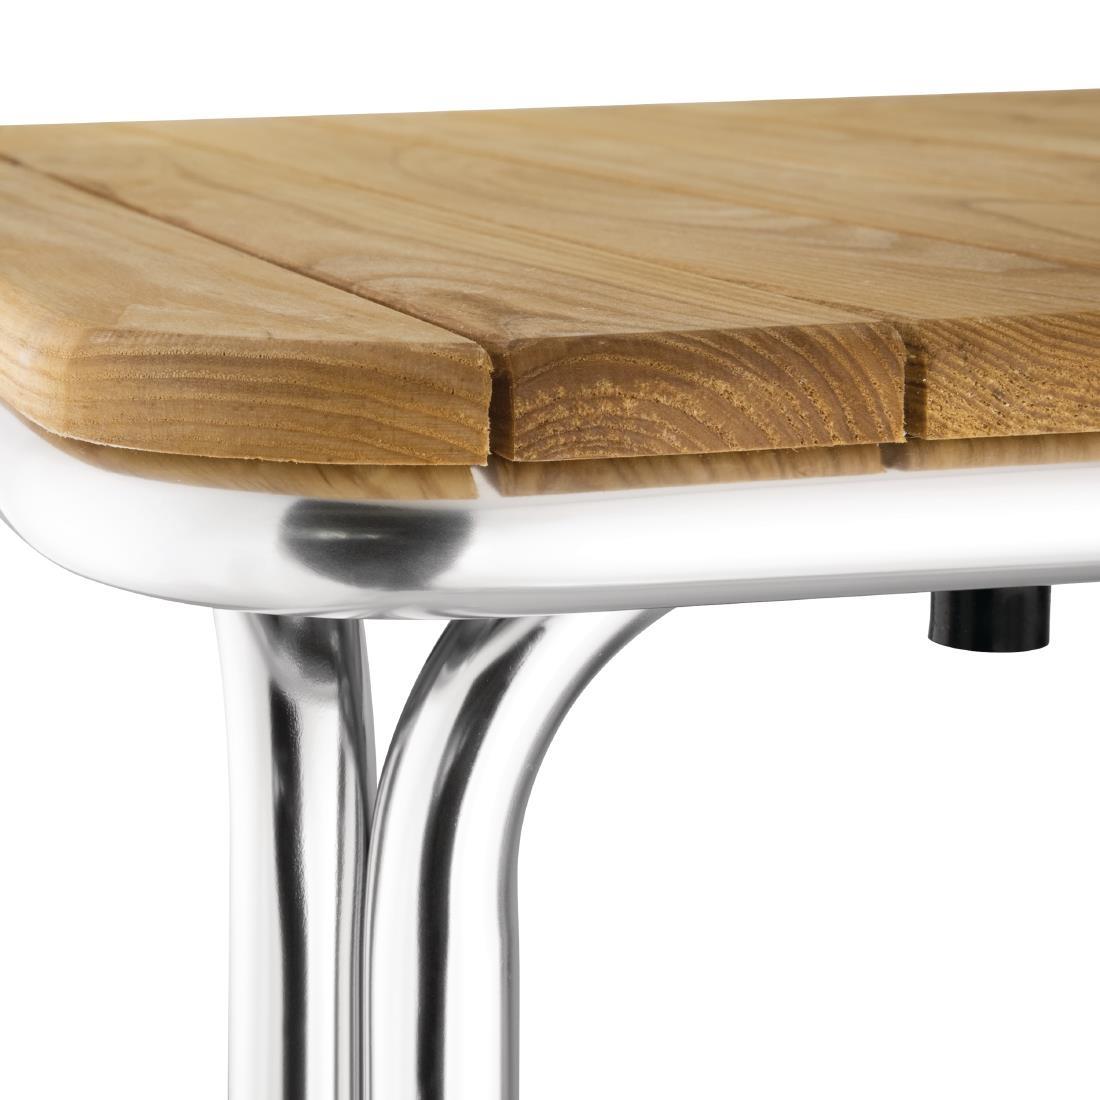 Bolero Square Ash and Aluminium Table 700mm - GL982  - 3